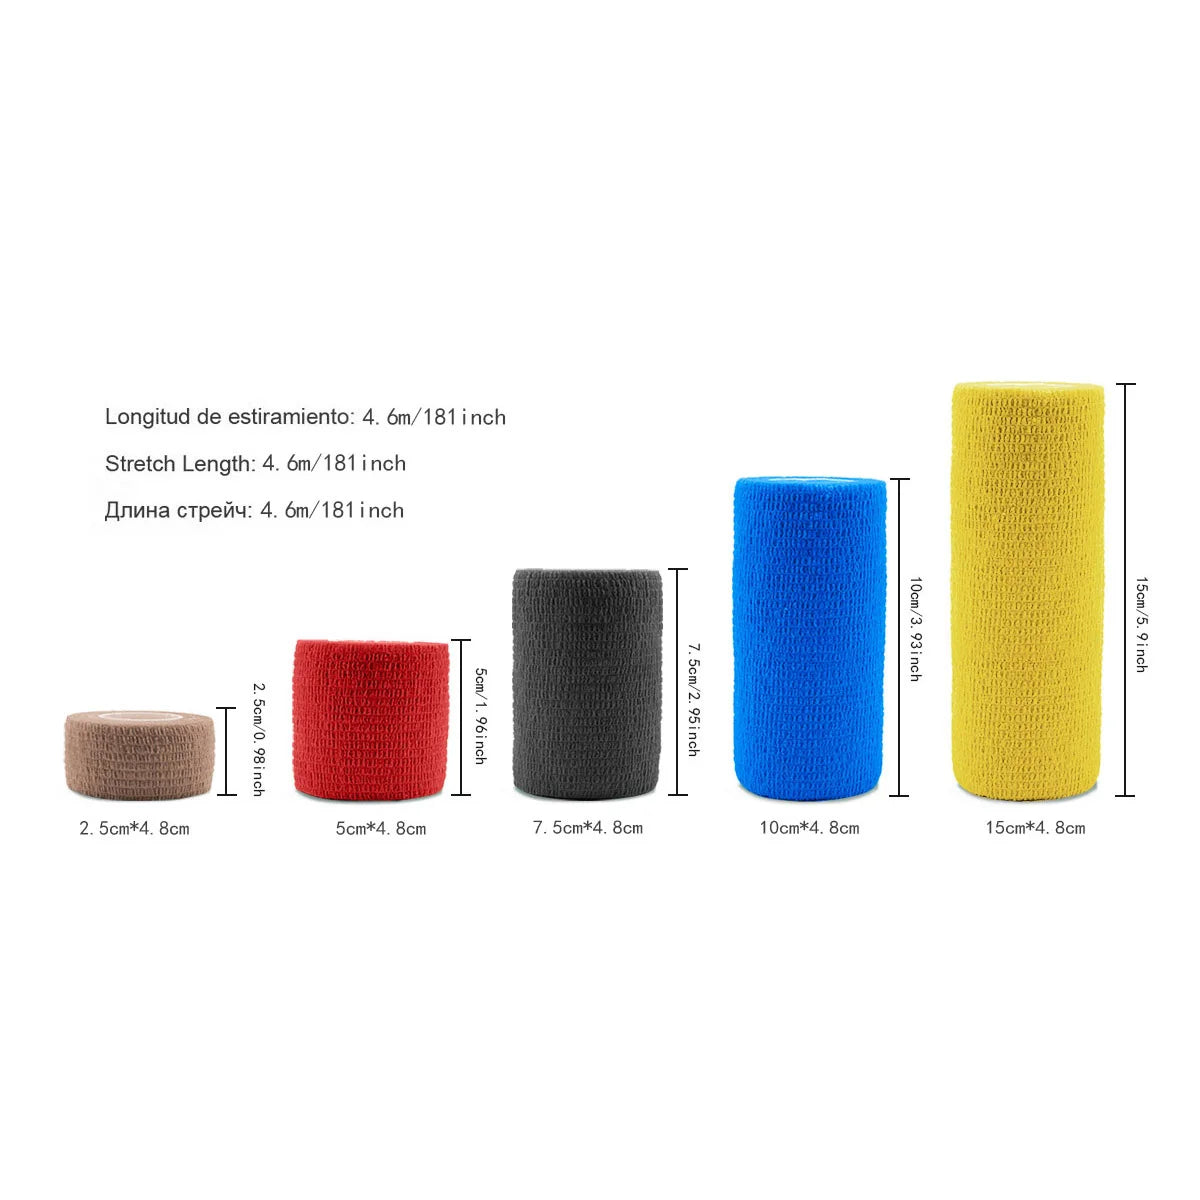 Colourful Athletic Wrap Tape Self Adhesive Elastic Bandage (11 Colours)